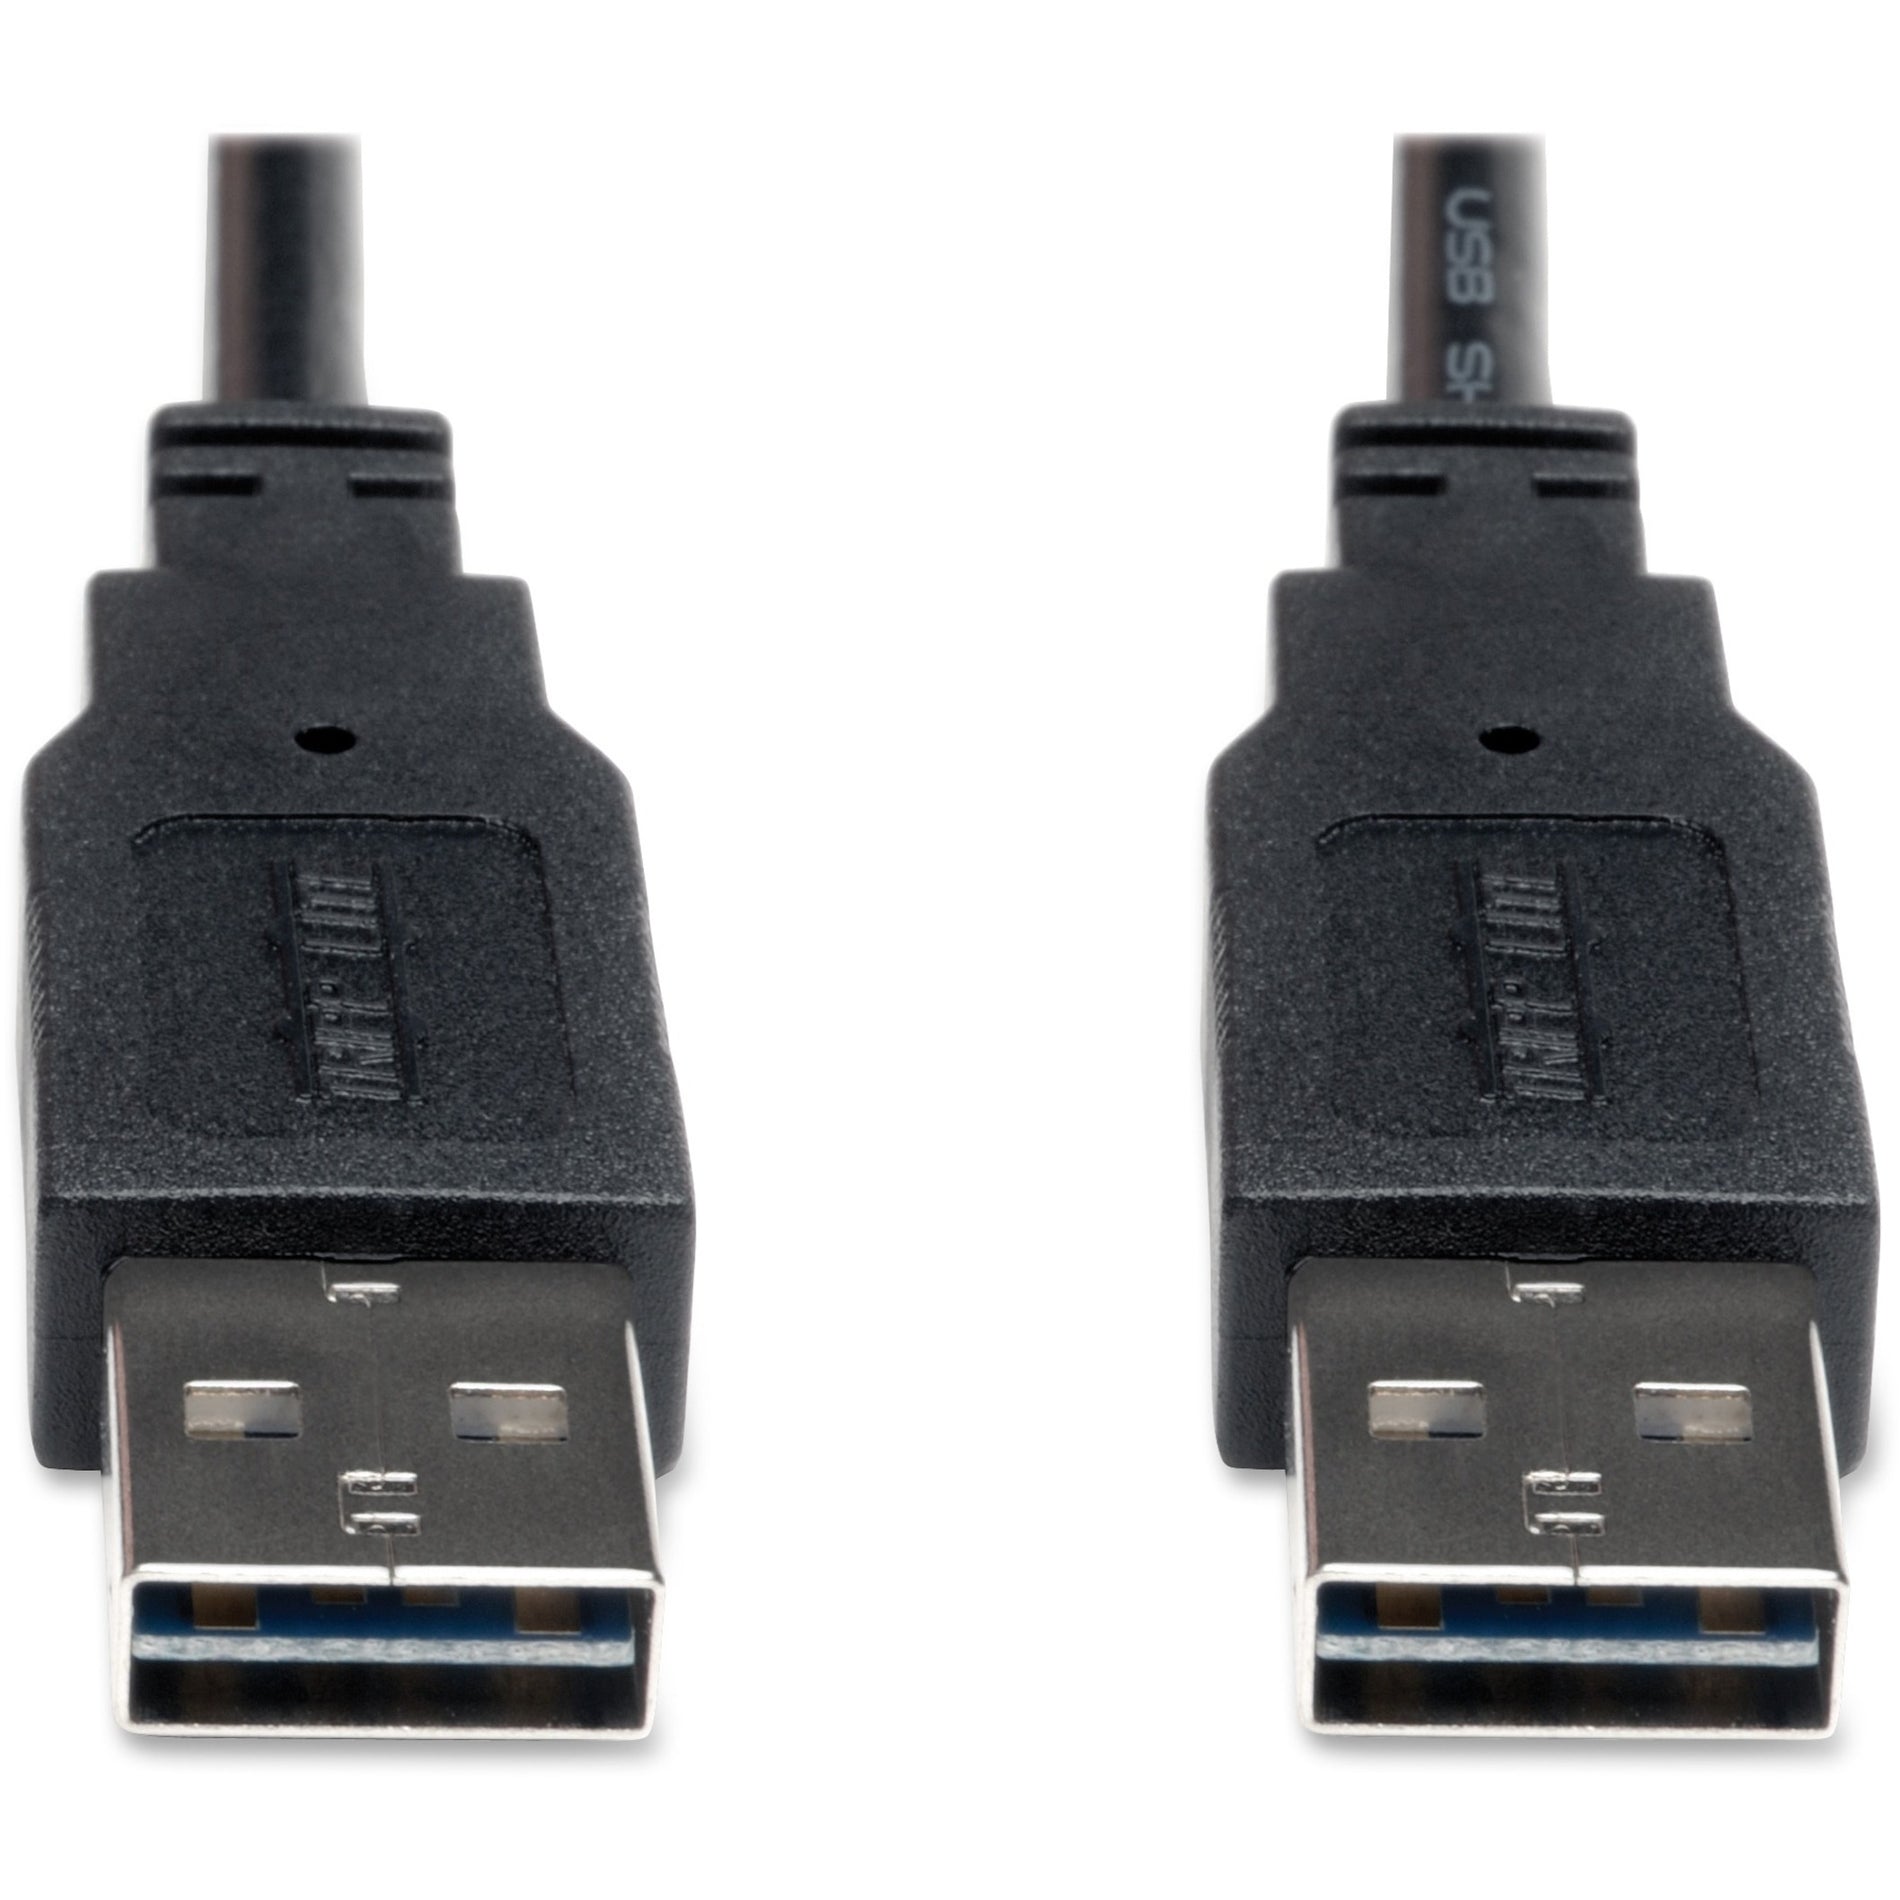 Tripp Lite UR020-003 Universal Reversible USB 2.0 Hi-Speed Kabel 3 ft Geformt Schwarz